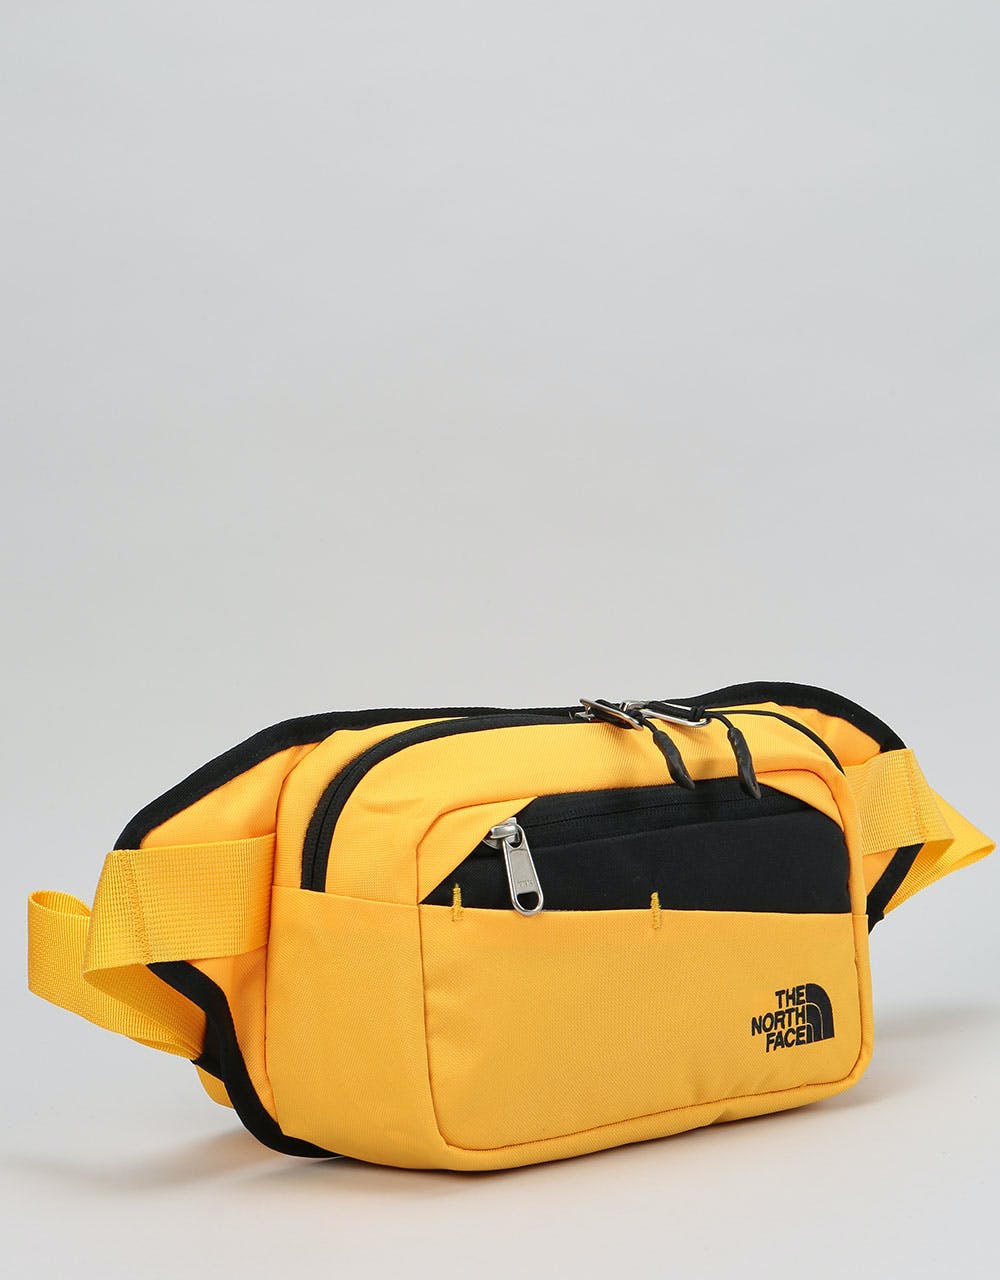 The North Face Bozer II Cross Body Bag - TNF Yellow/TNF Black